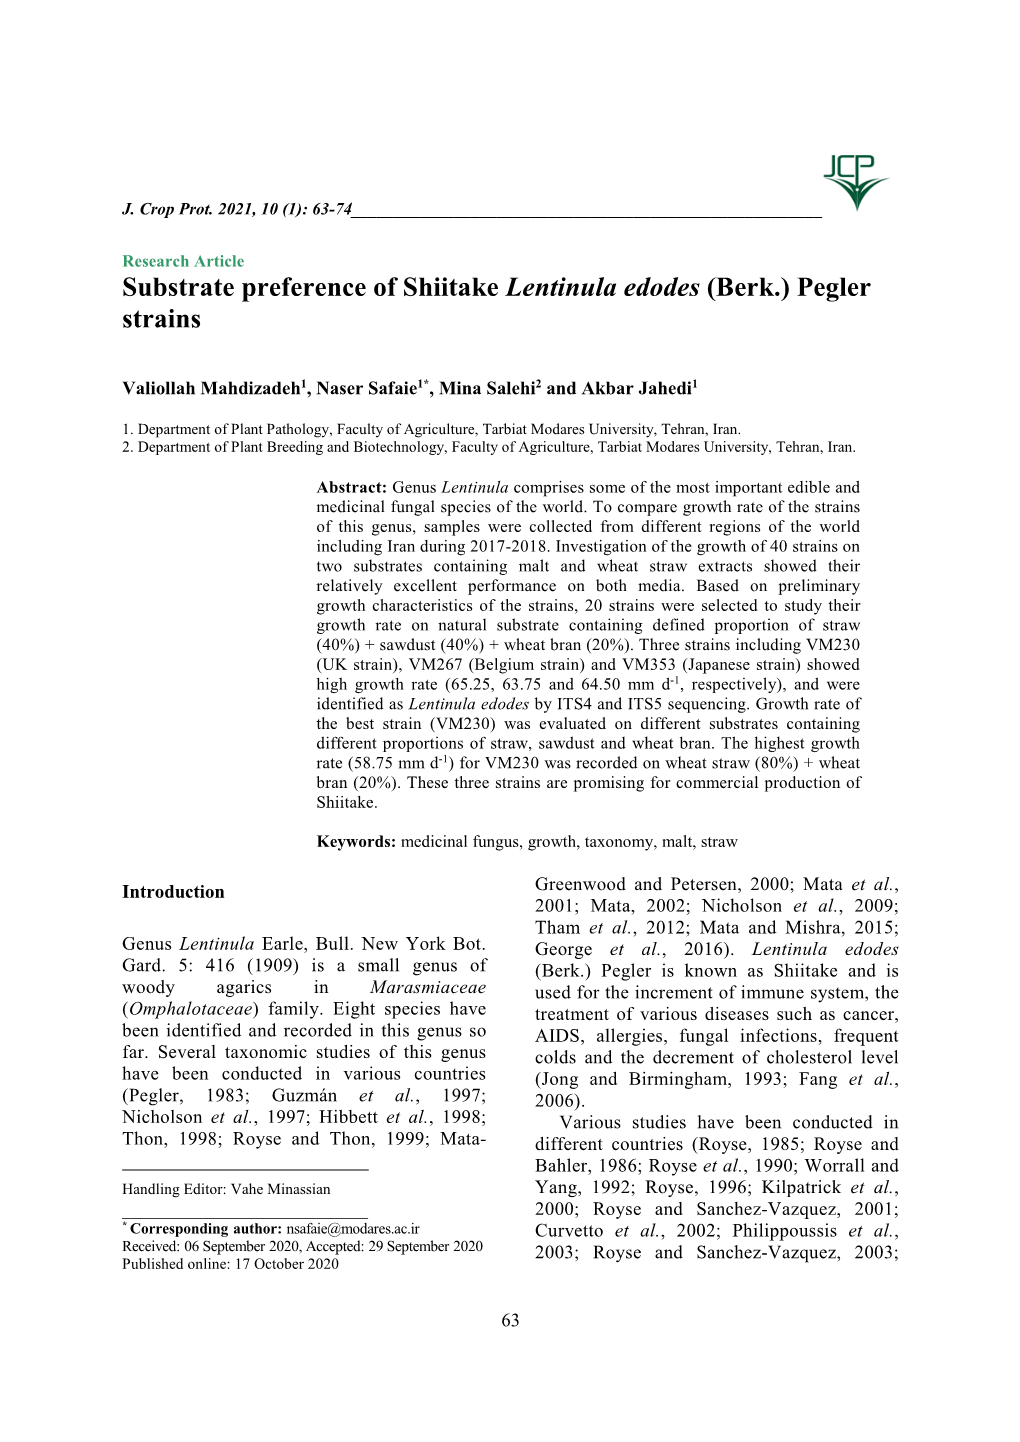 Substrate Preference of Shiitake Lentinula Edodes (Berk.) Pegler Strains